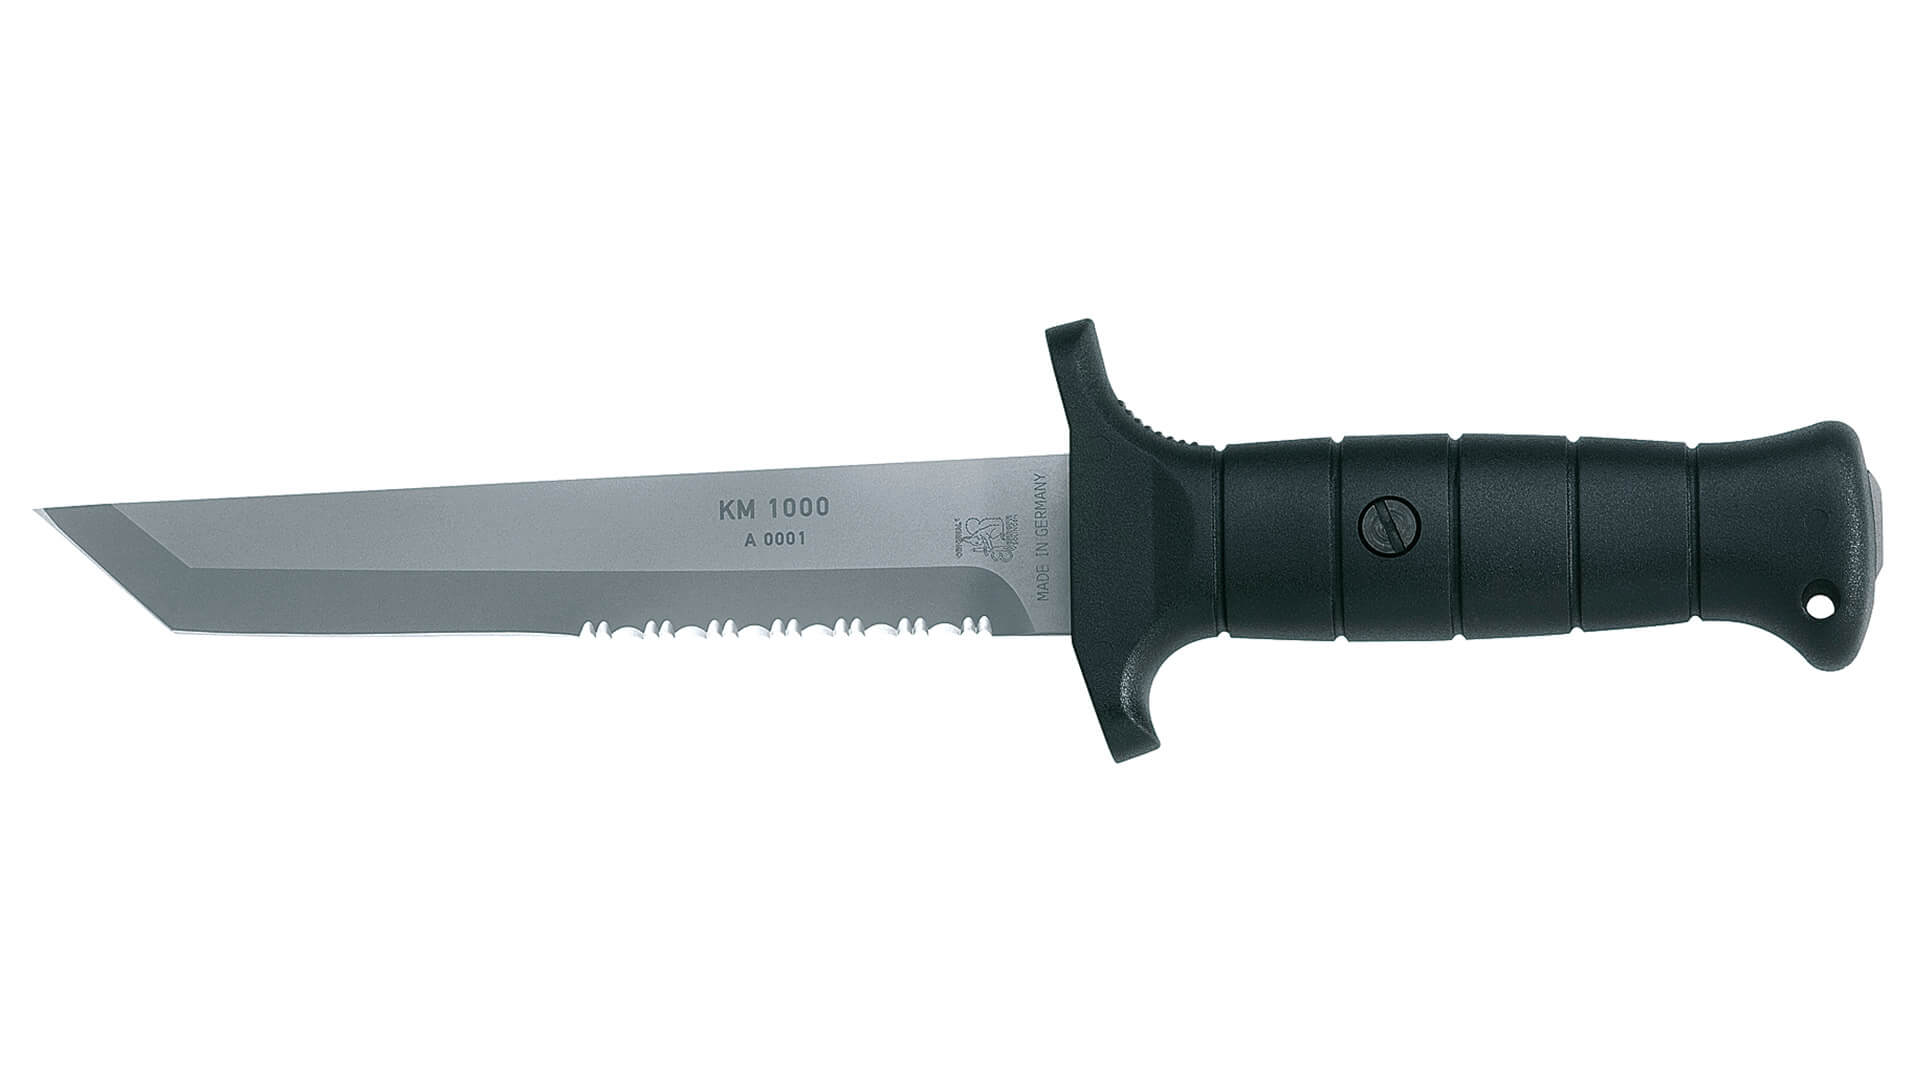 eickhorn-km1000-kampfmesser-bundeswehr-knife-buy